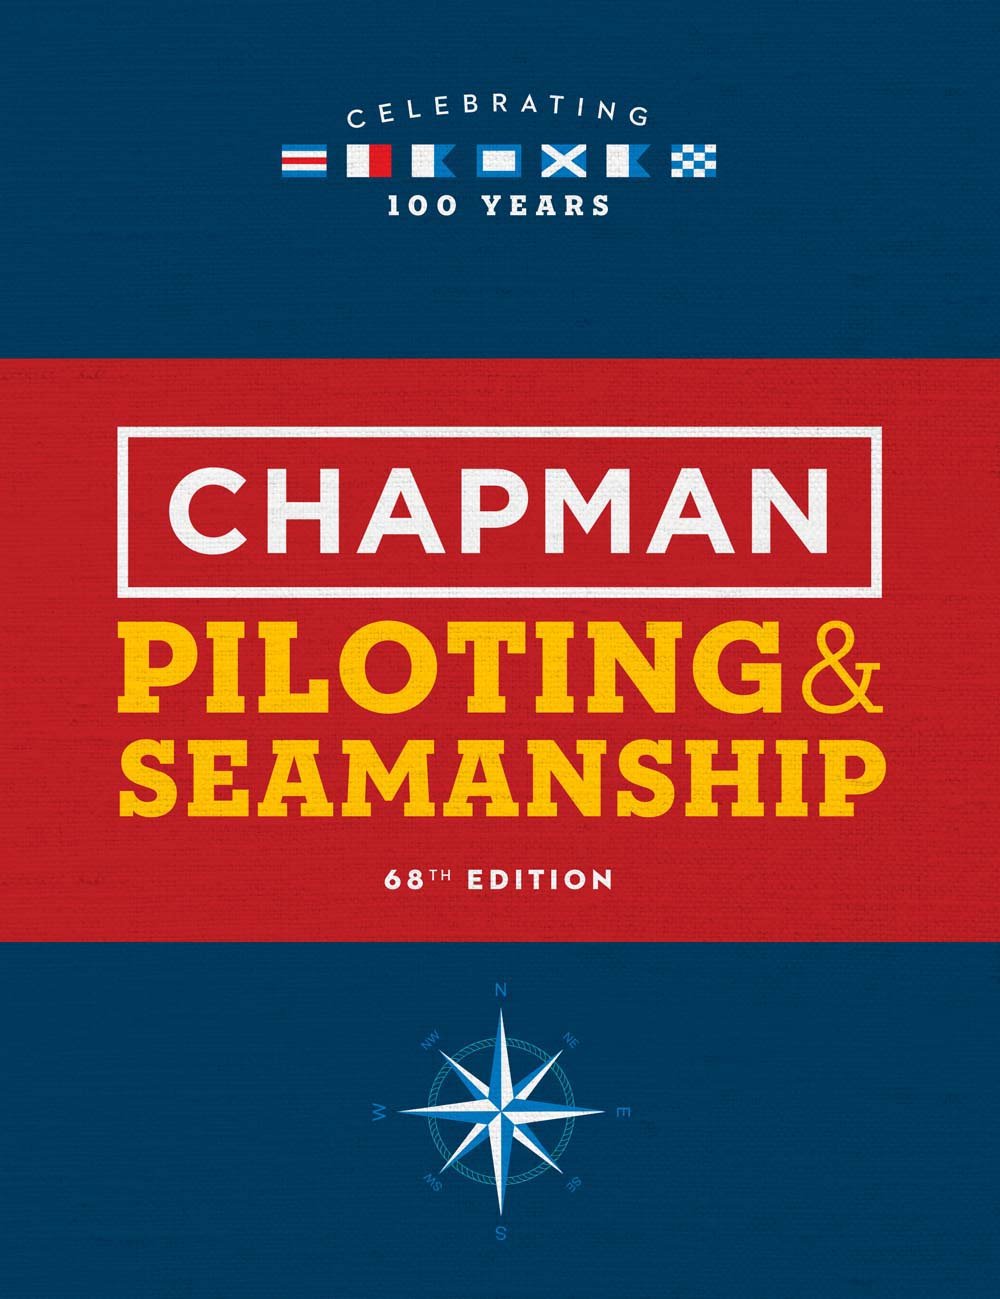 Chapman Piloting & Seamanship 68th Edition